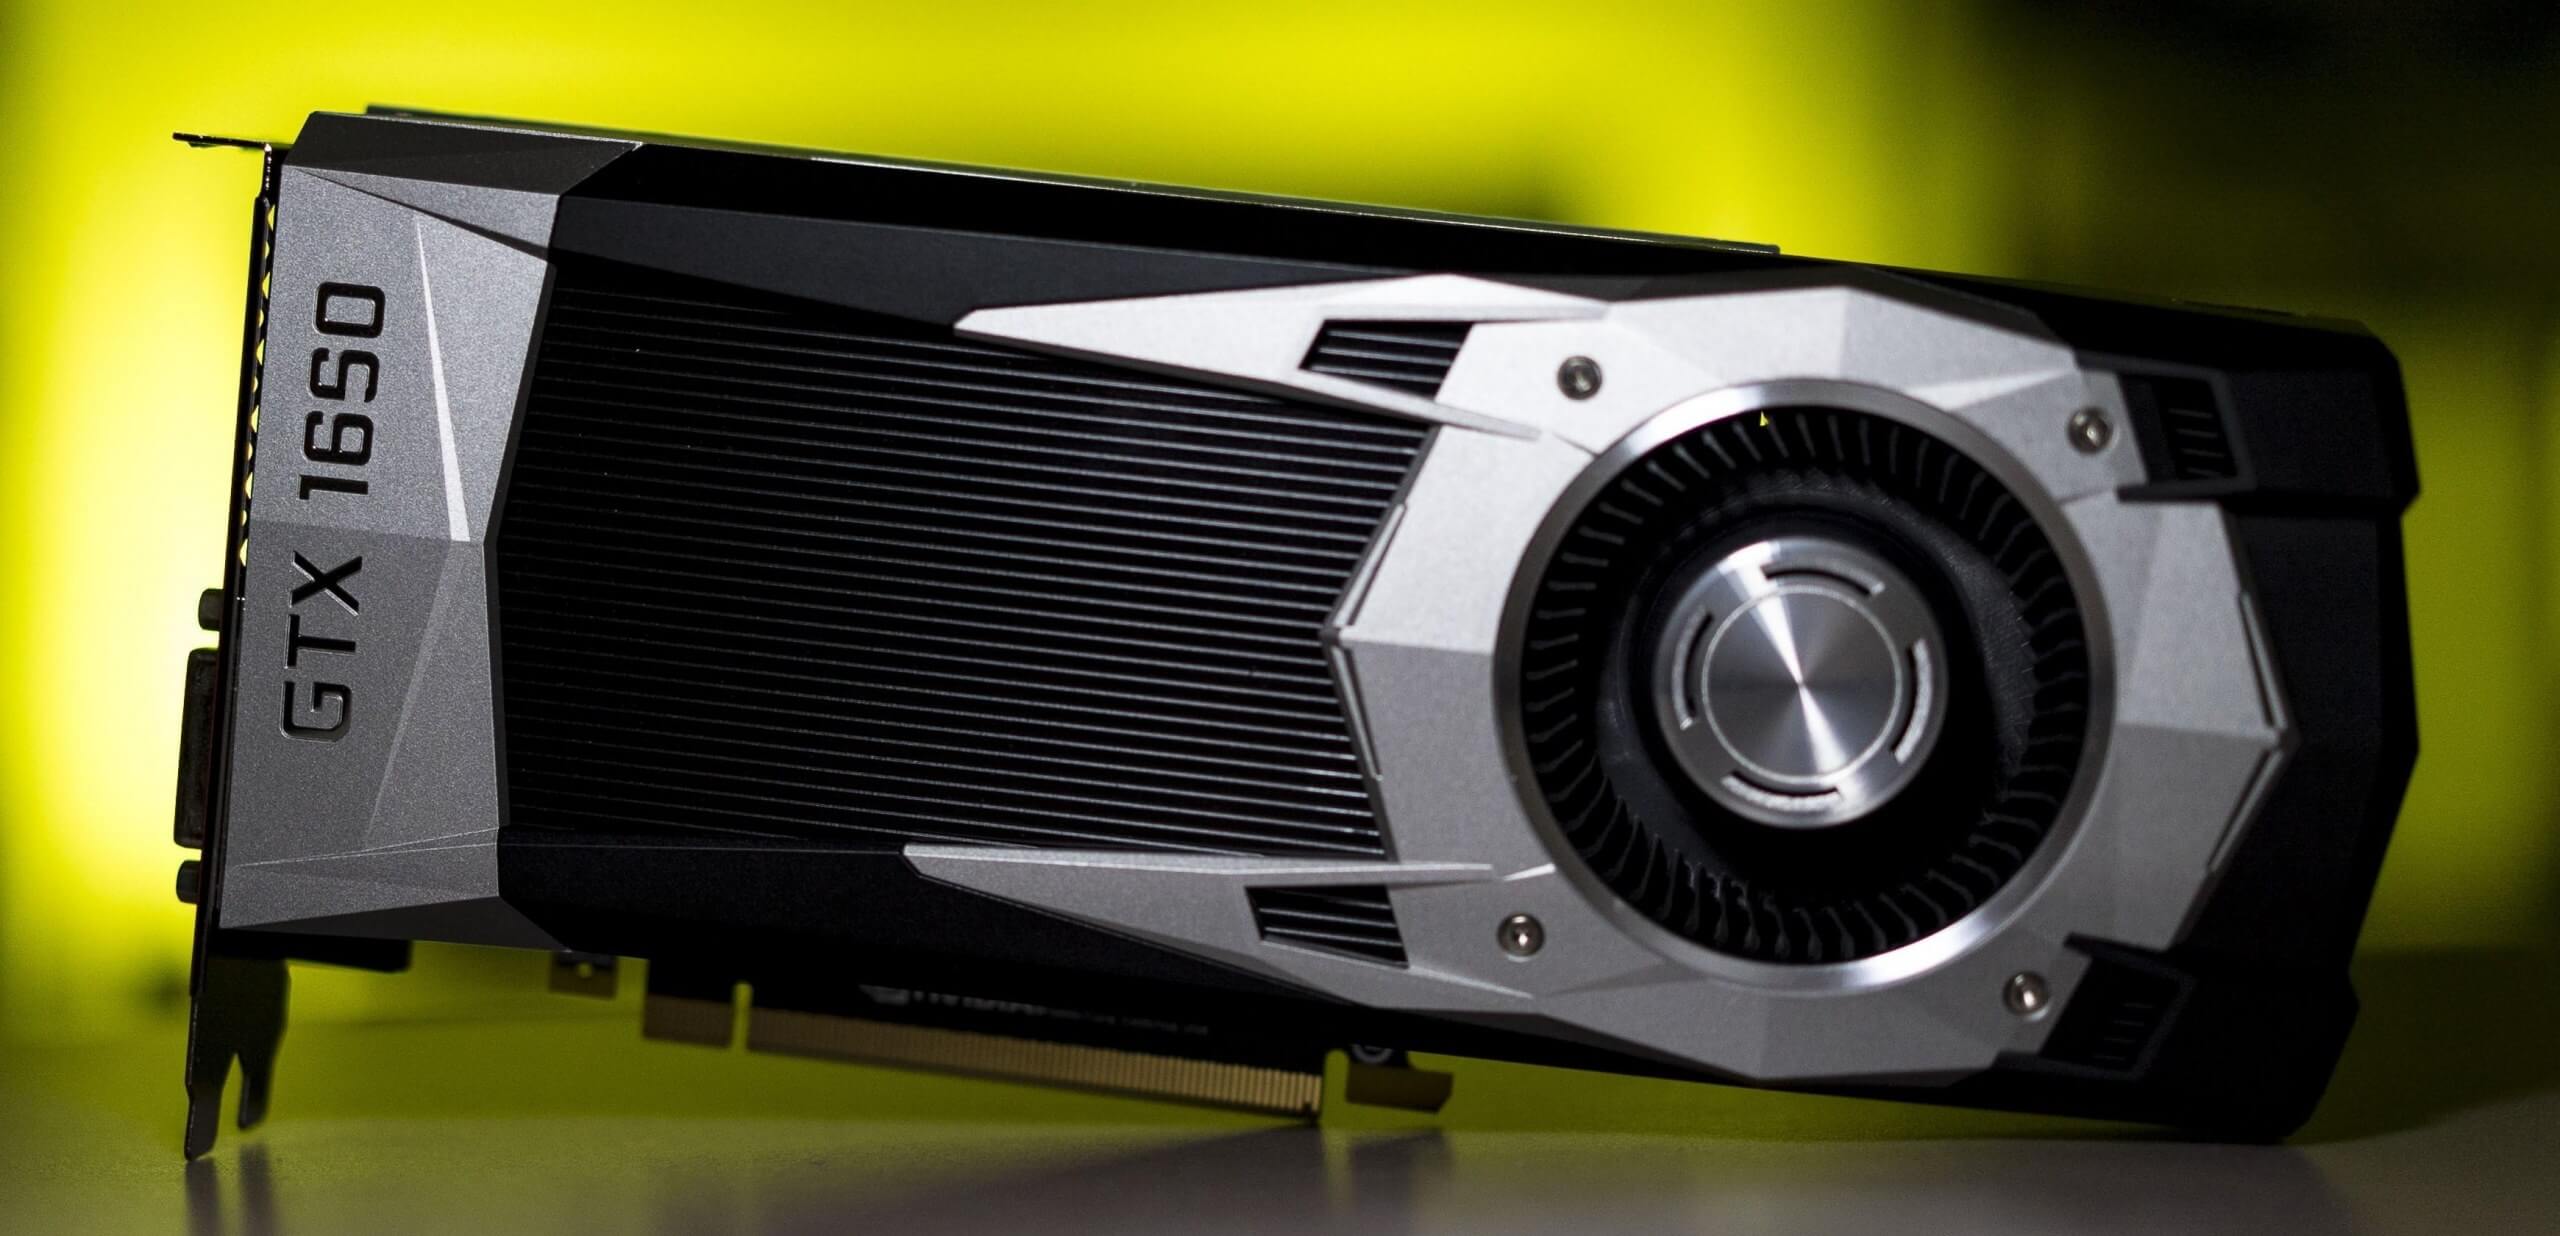 Nvidia soon to announce new Geforce GTX 1650 GPU - The ...